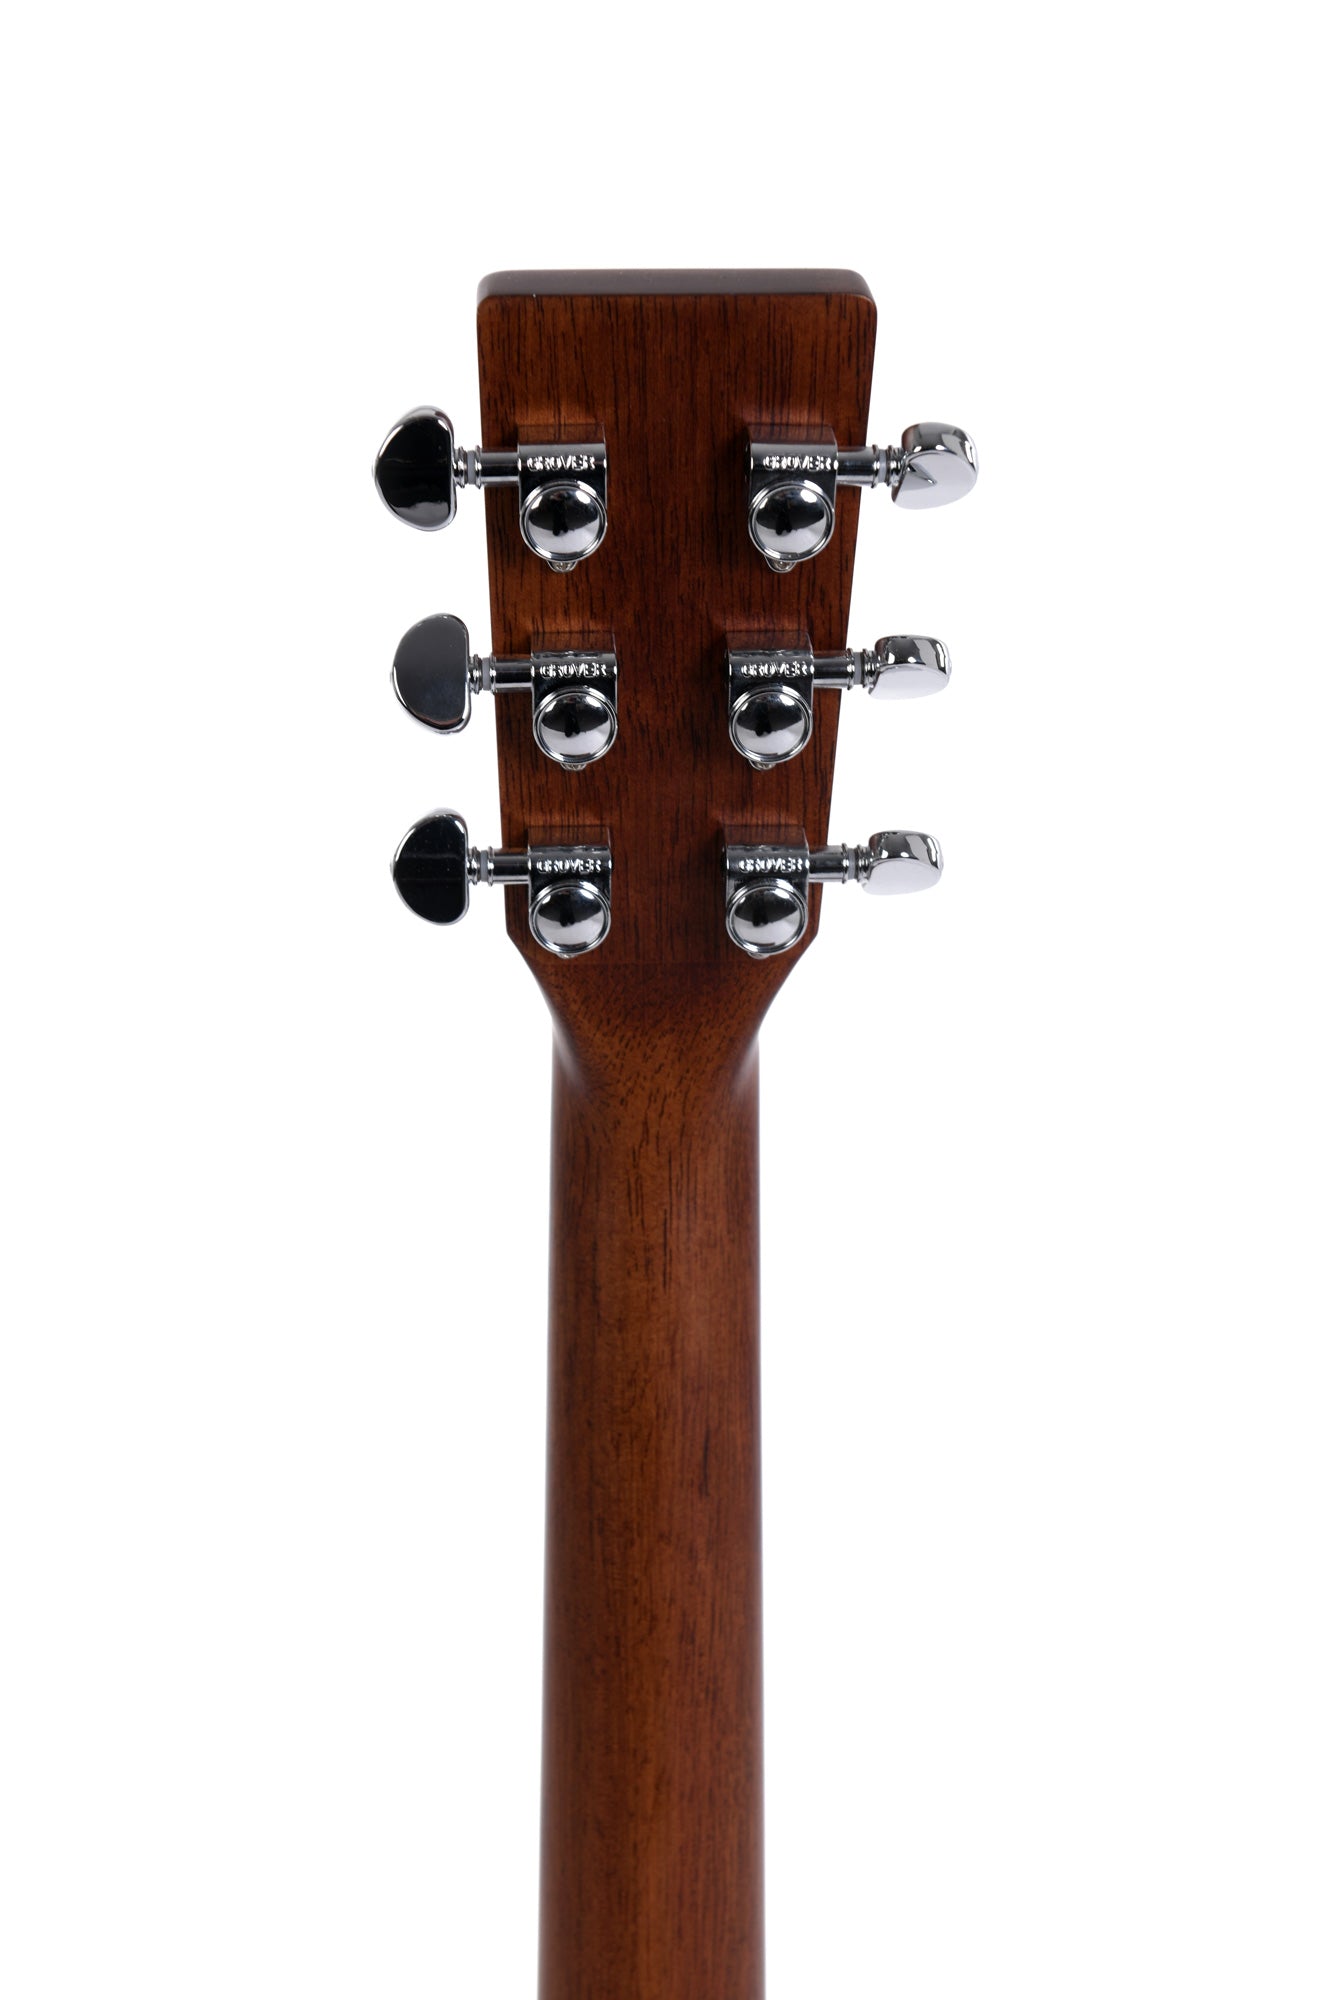 Sigma 000MC-15E+ Electric Acoustic Guitar